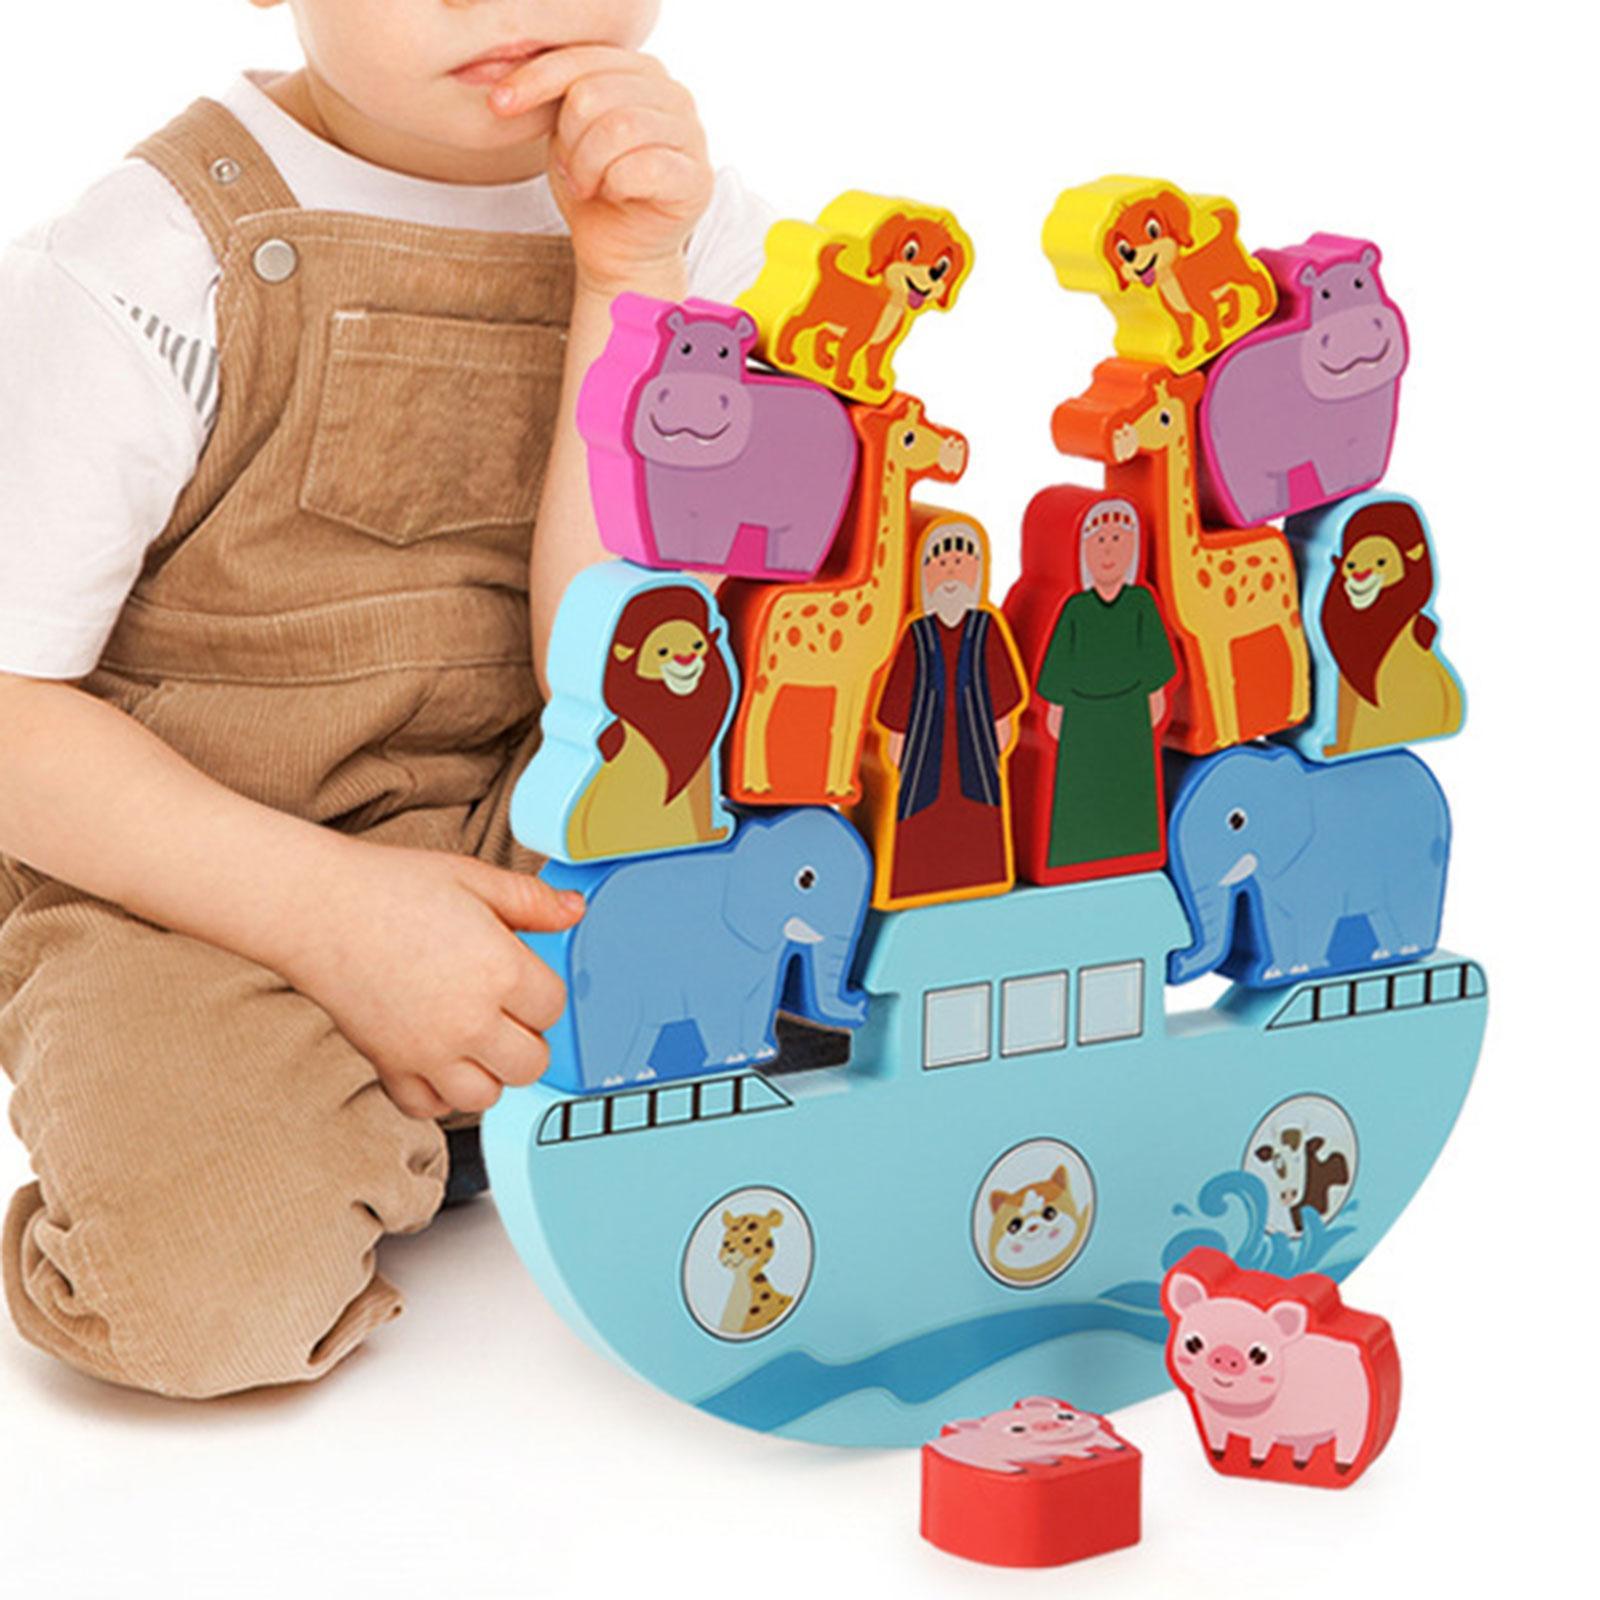 Montessori Wooden Balance Game Motor Skills Early Educational Toys Brain Development for Kids Toddler Girls Boys Children Gifts